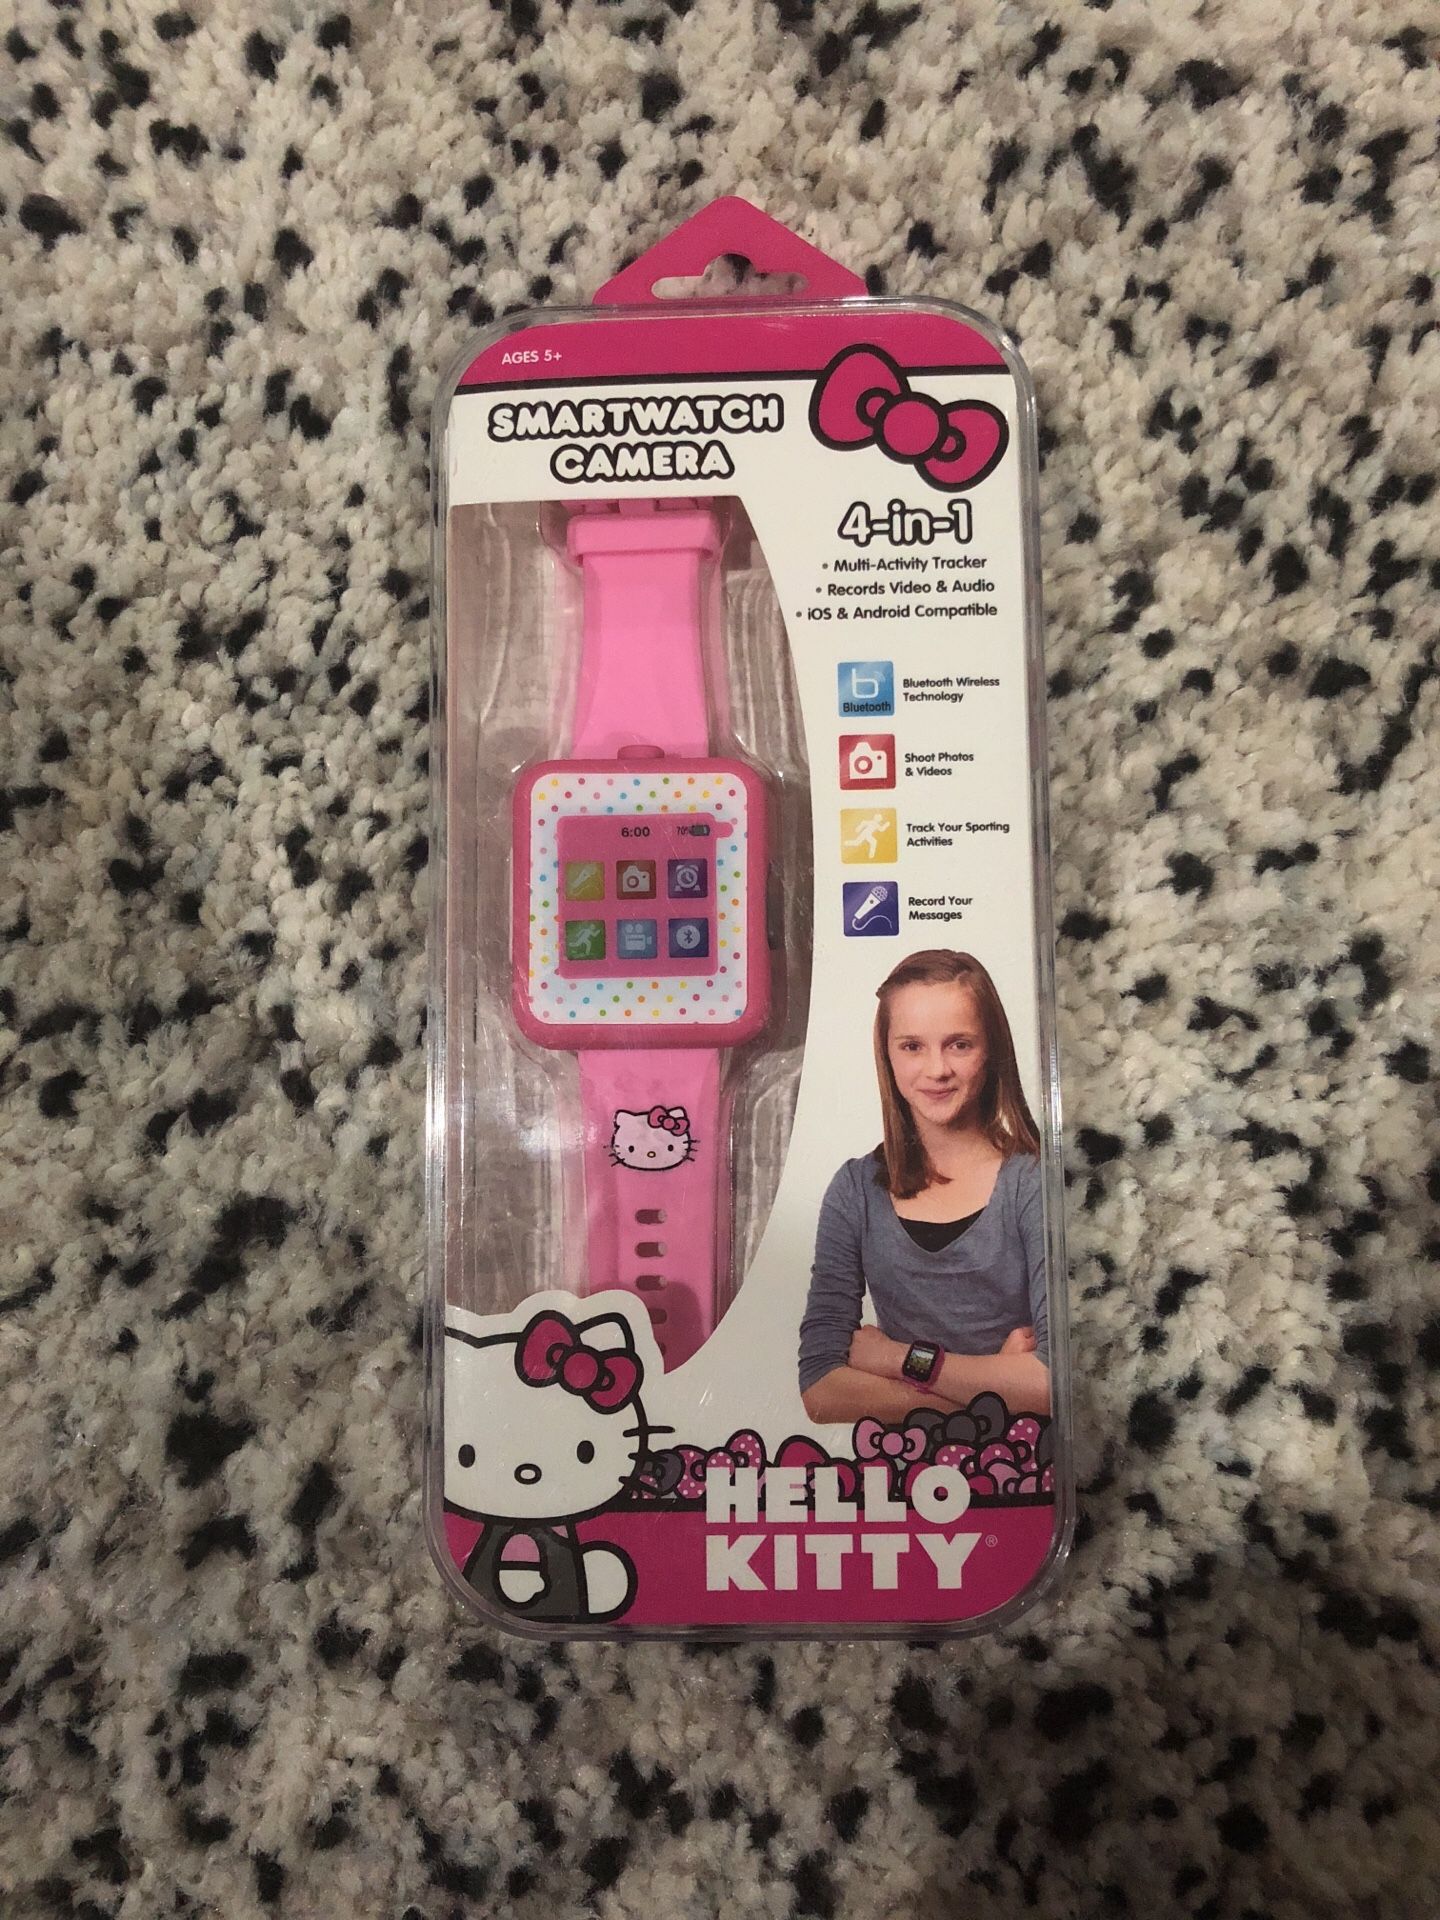 Hello Kitty smart watch camera